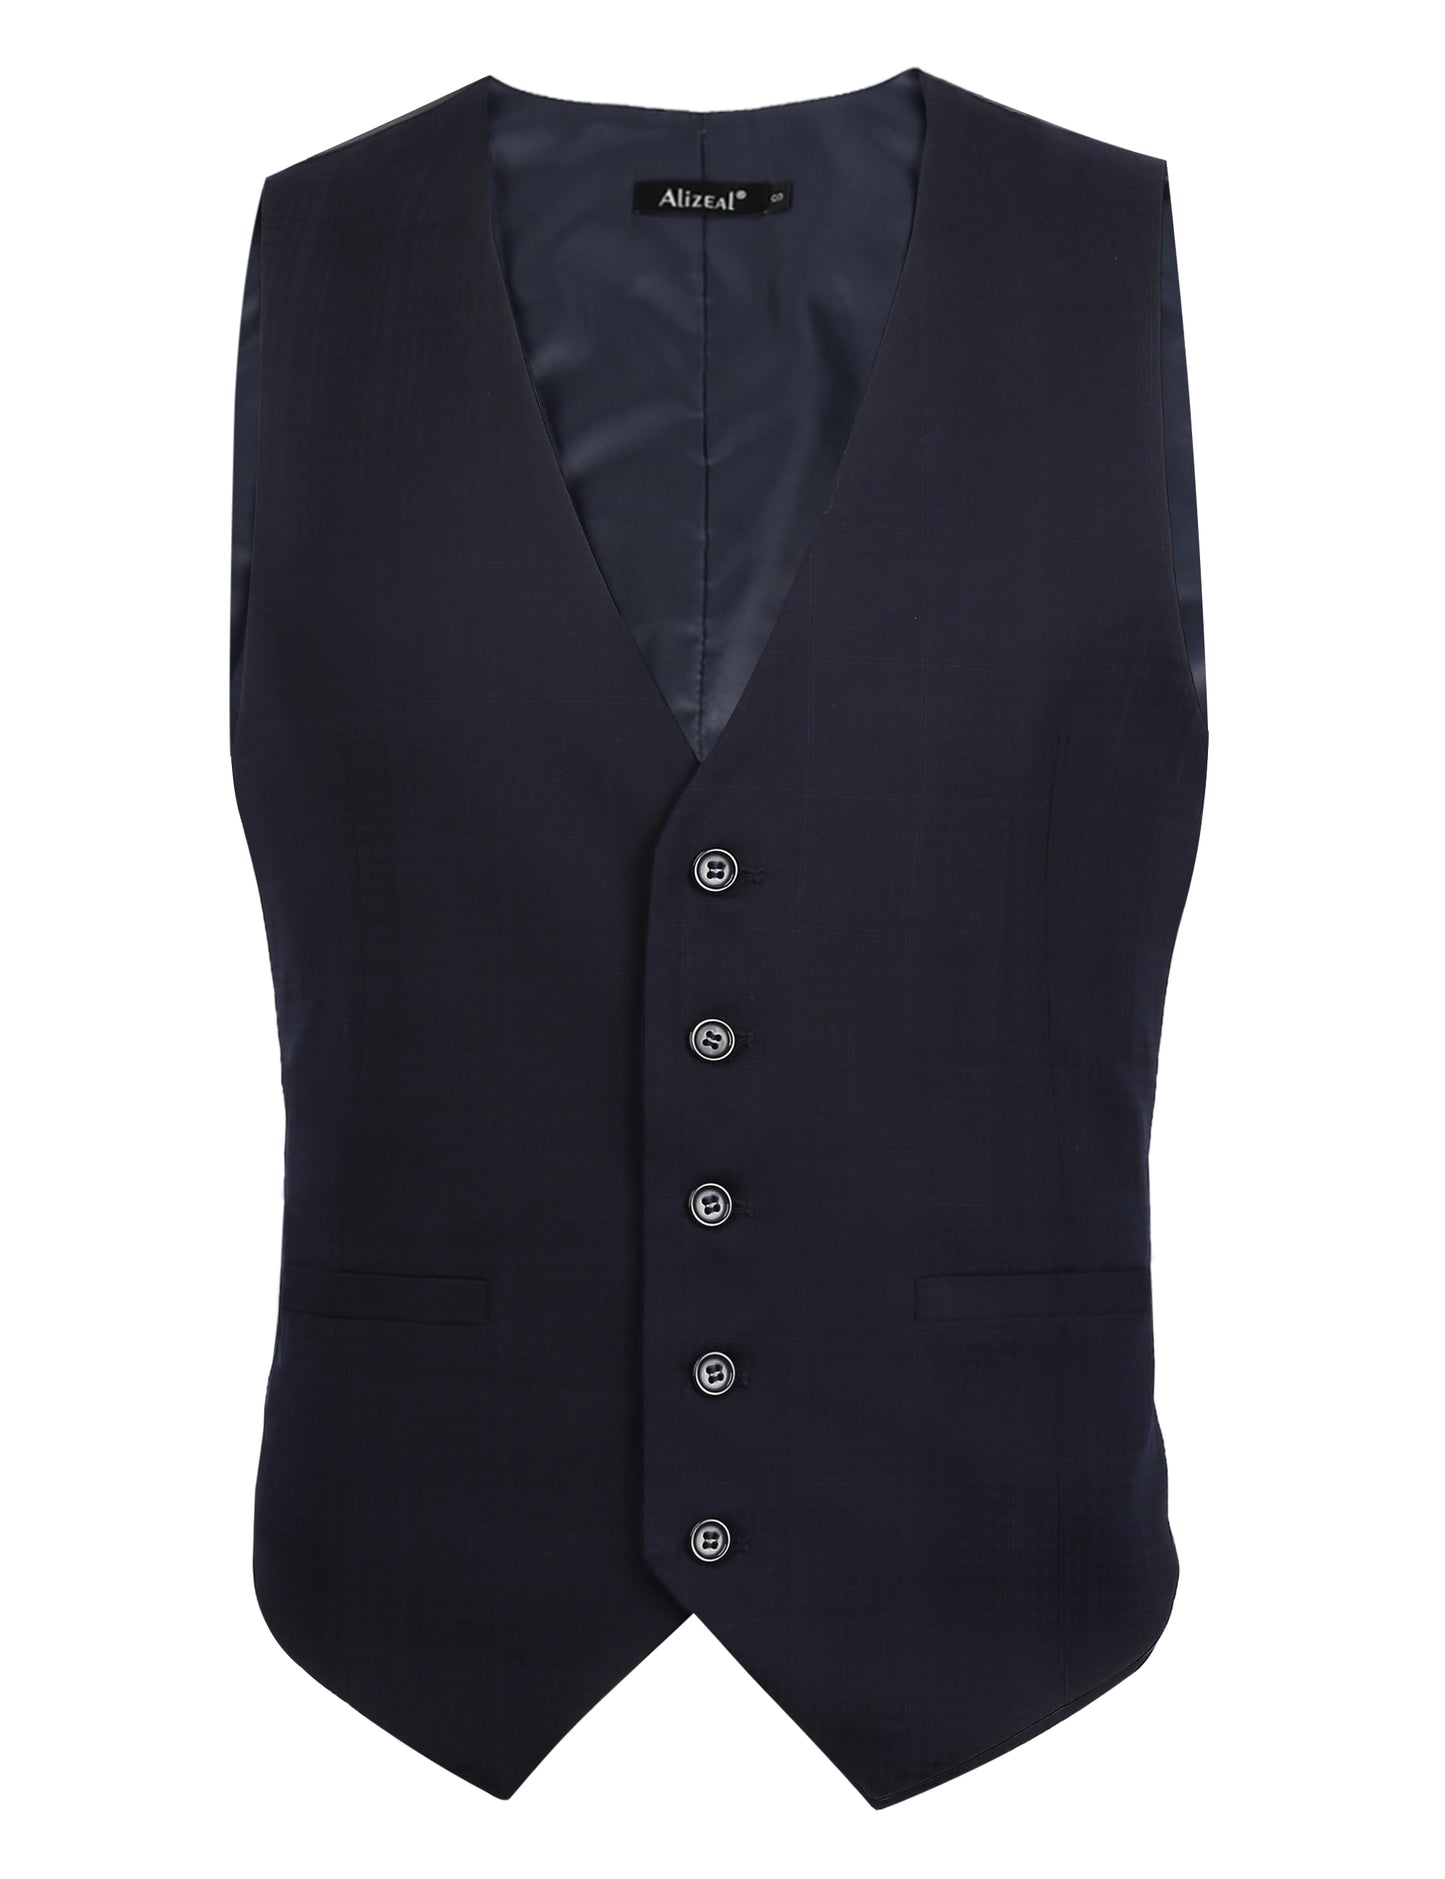 Men's Plaid Business Suit Vest Formal Dress Slim Fit Waistcoat, 194-Dark Navy